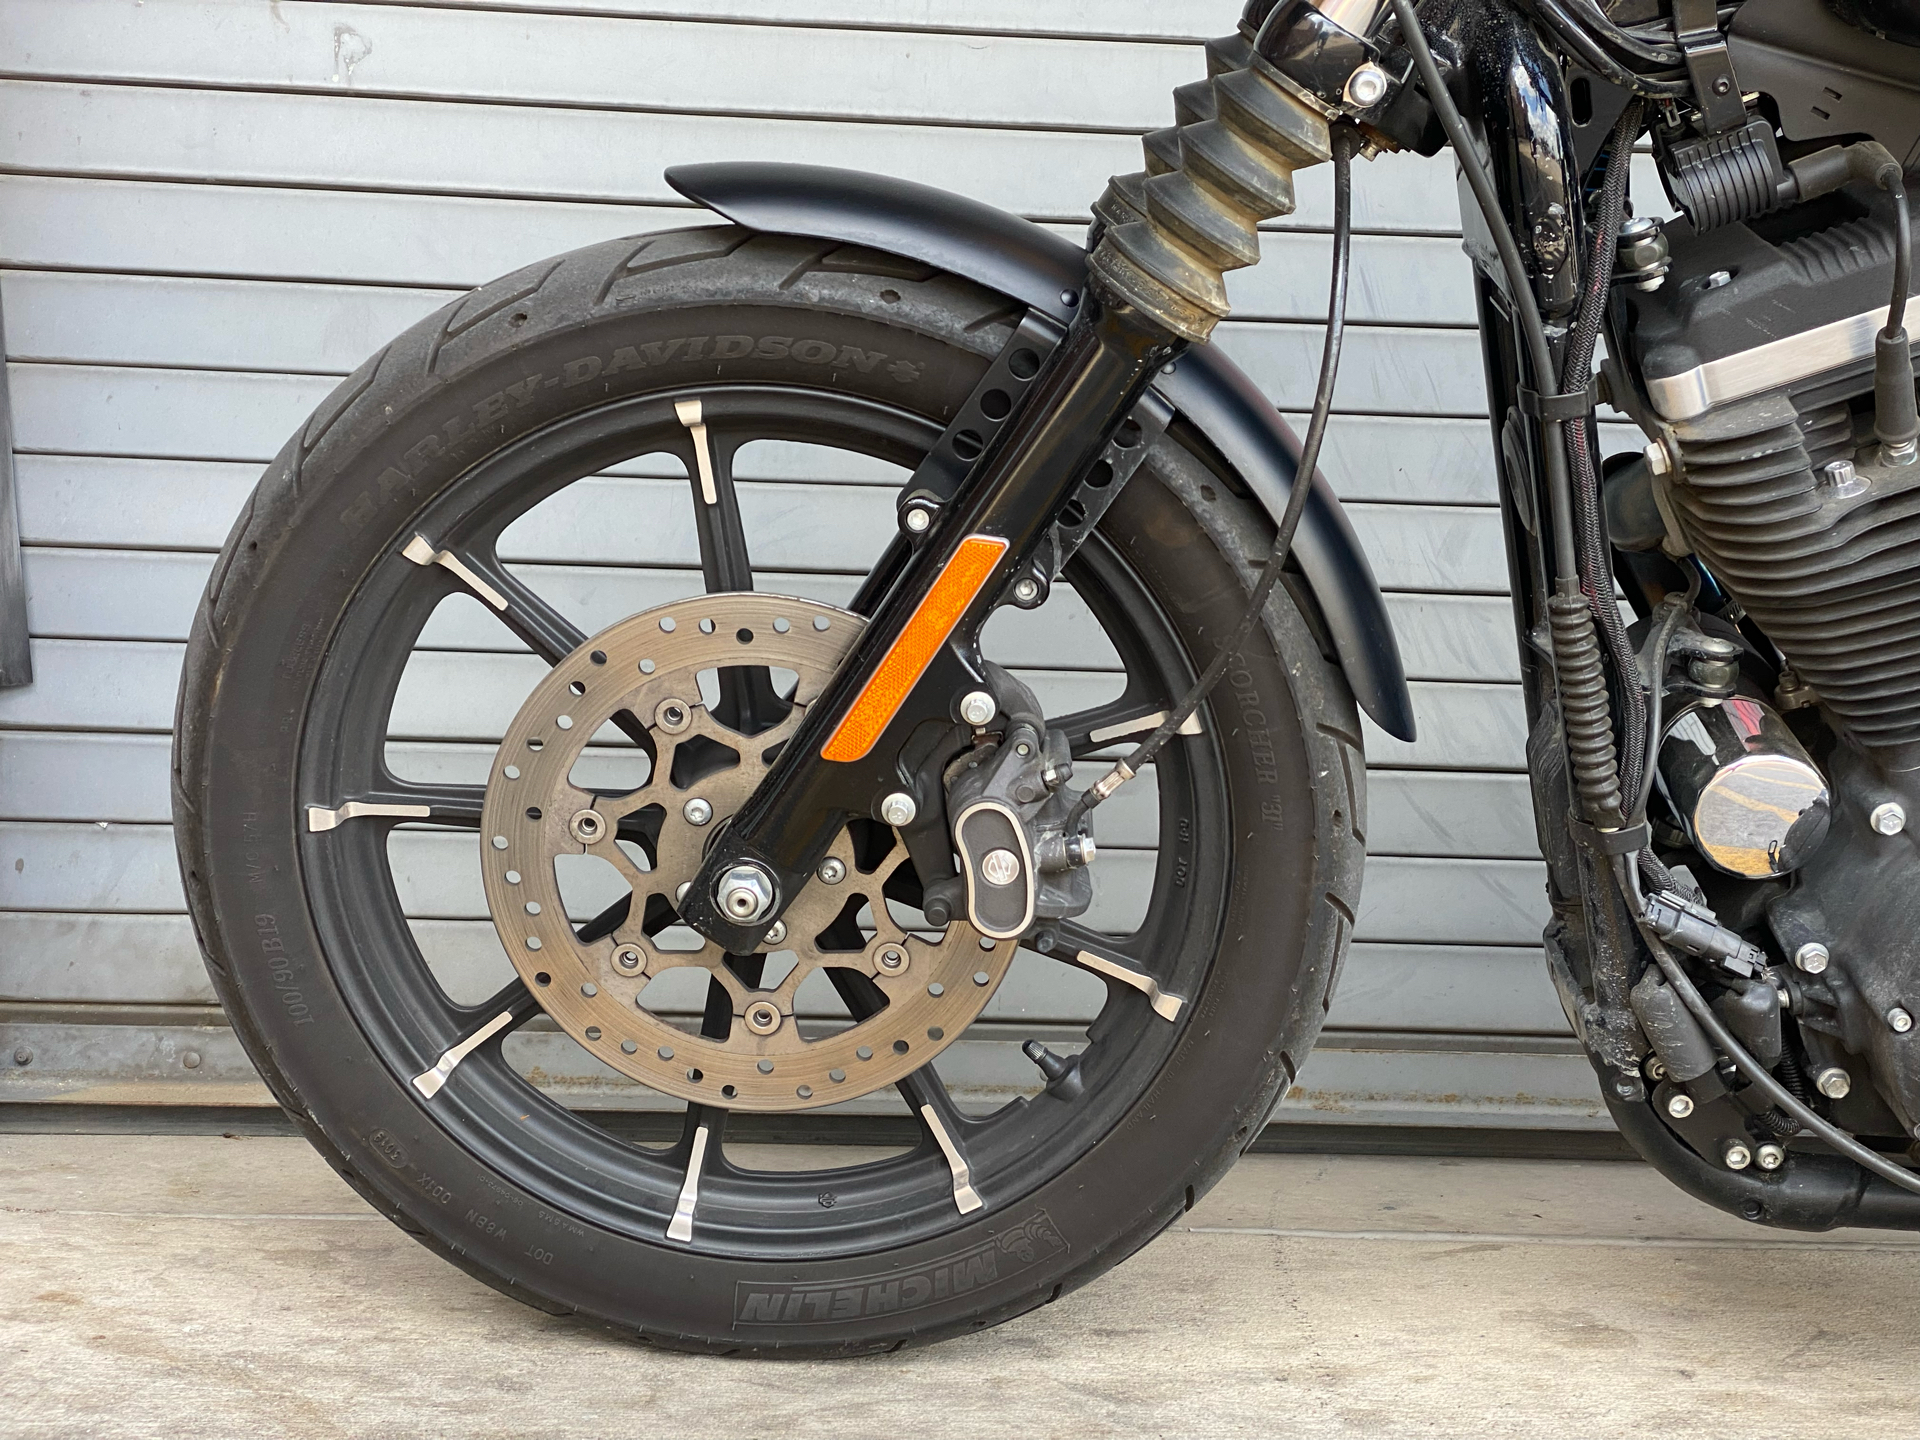 2020 Harley-Davidson Iron 883™ in Carrollton, Texas - Photo 14